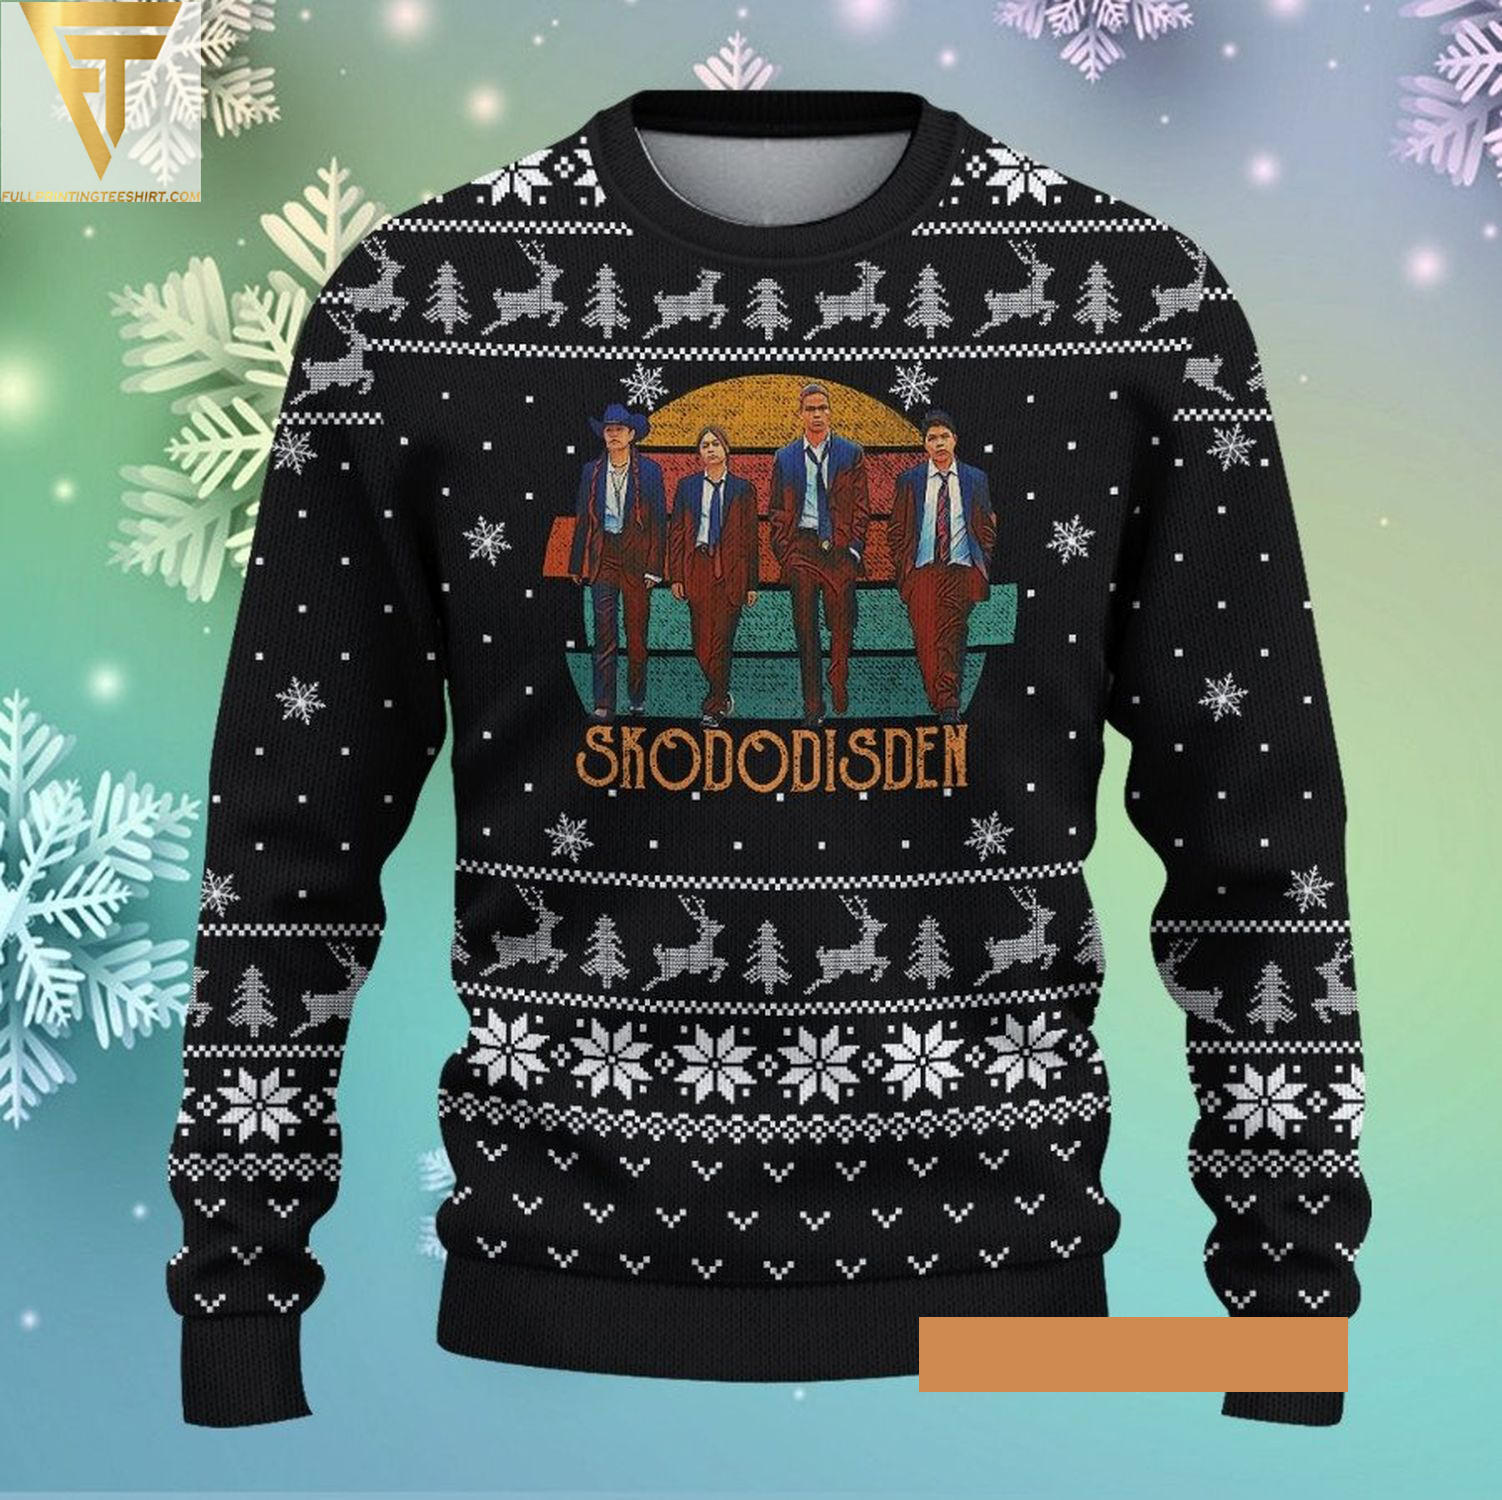 Native american skododisden ugly christmas sweater - Copy (2)